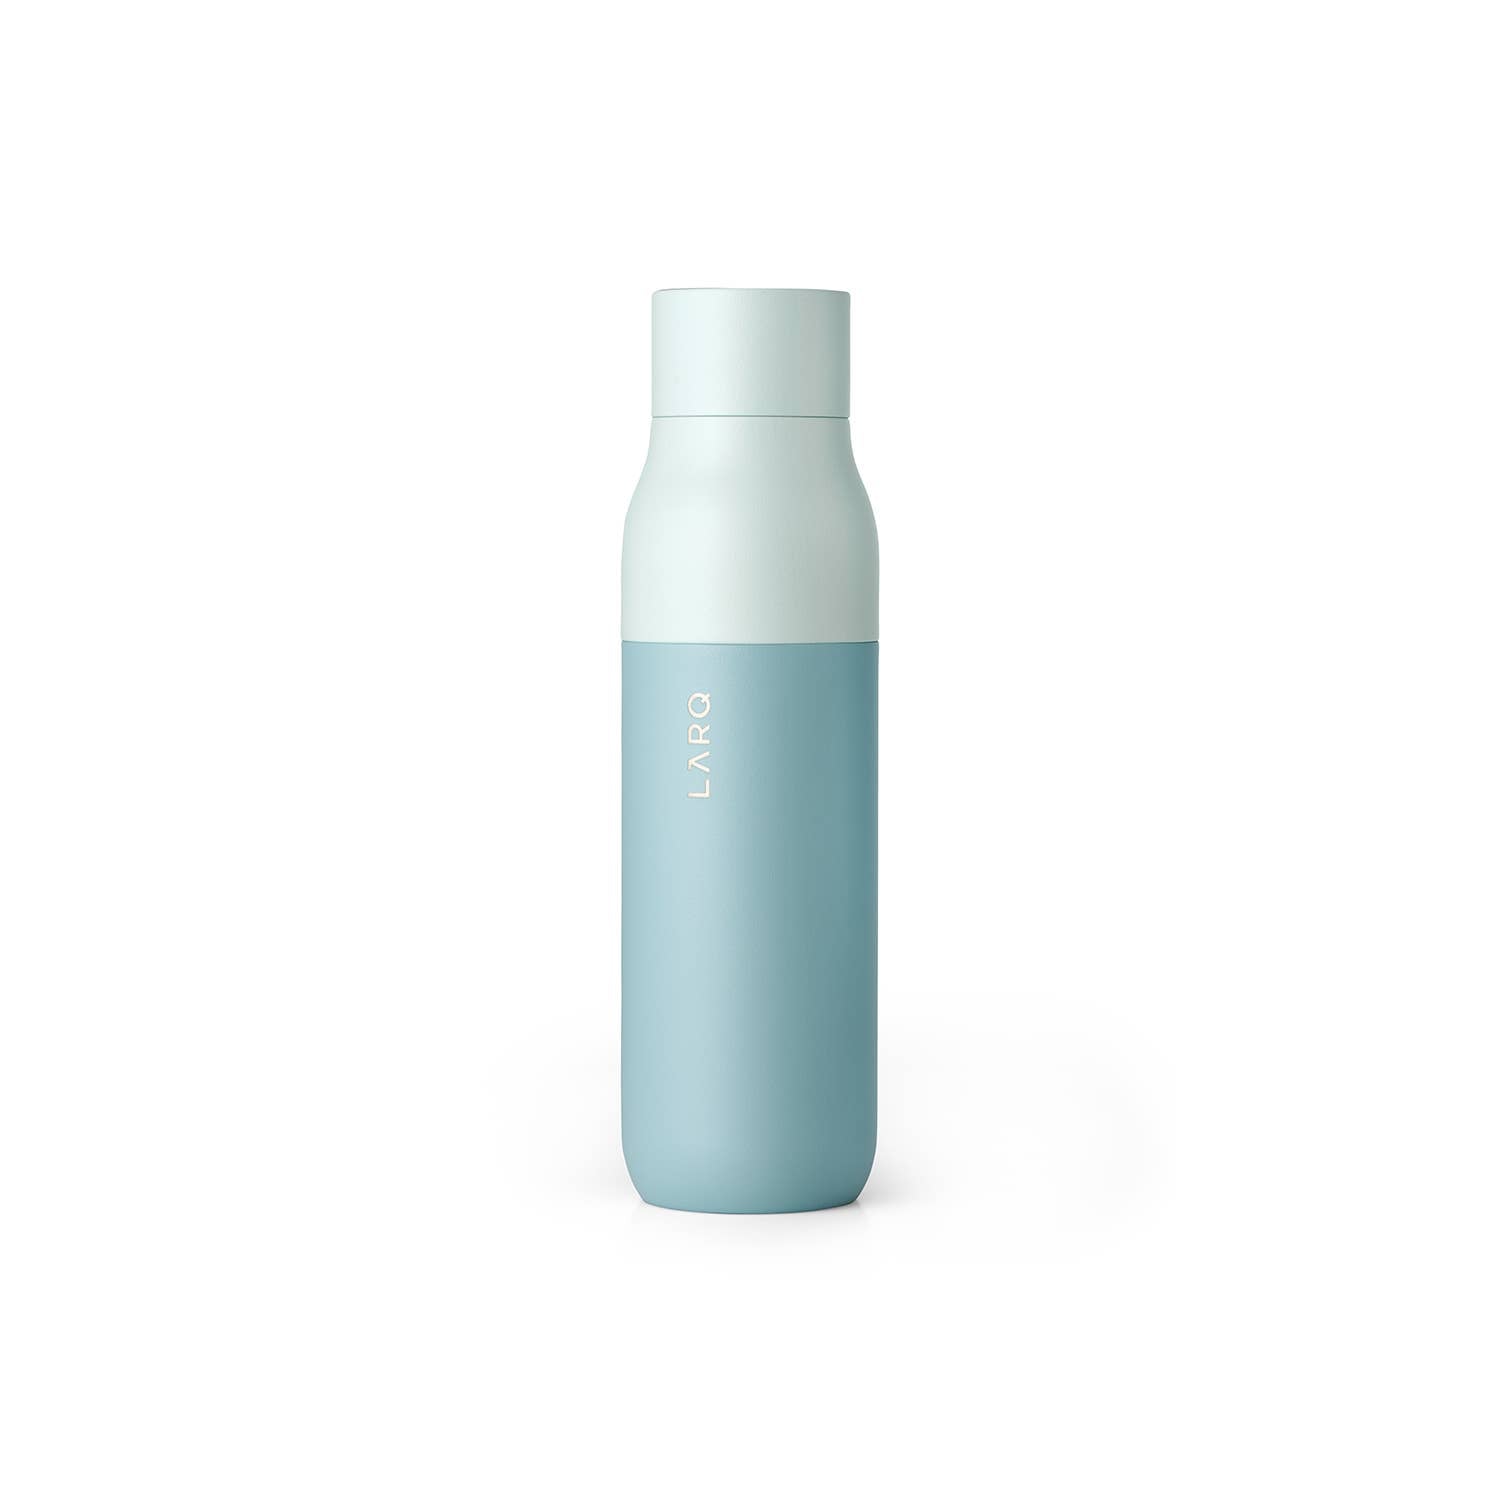 LARQ Bottle - Water Purification in a Self-Cleaning Bottle by